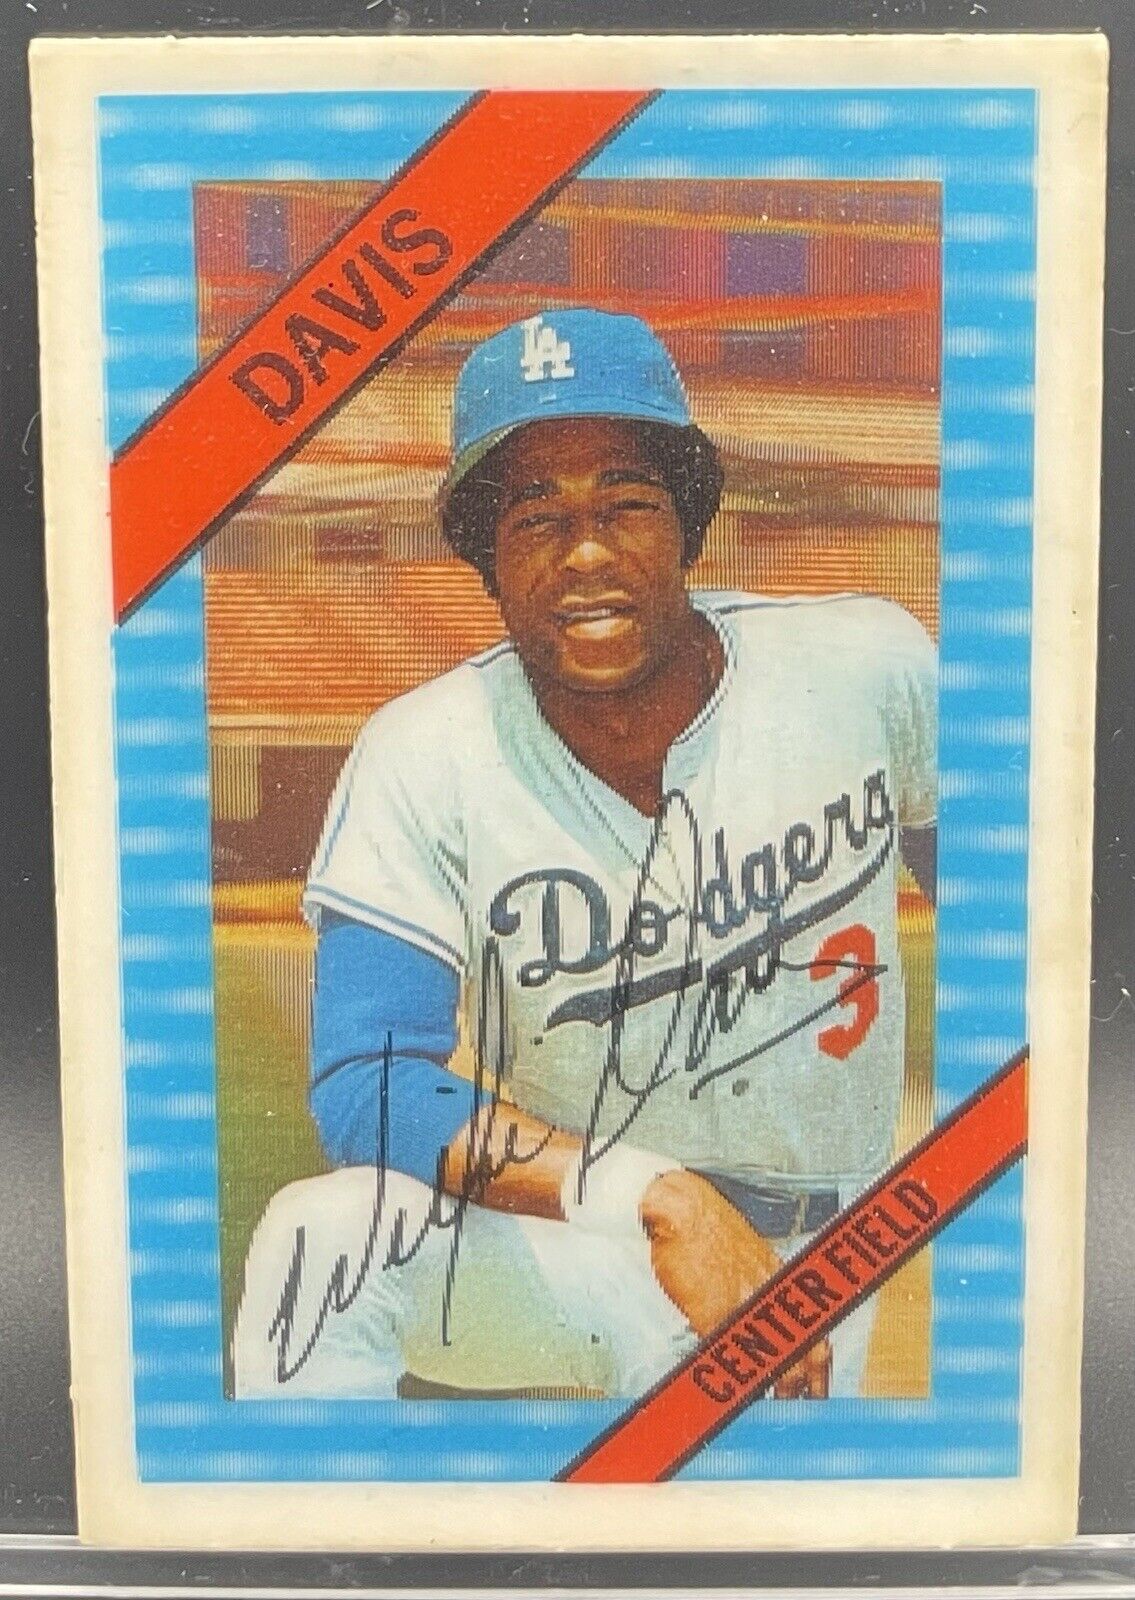 William Davis 1972 XOGRAPH #03-54 Los Angeles Dodgers 